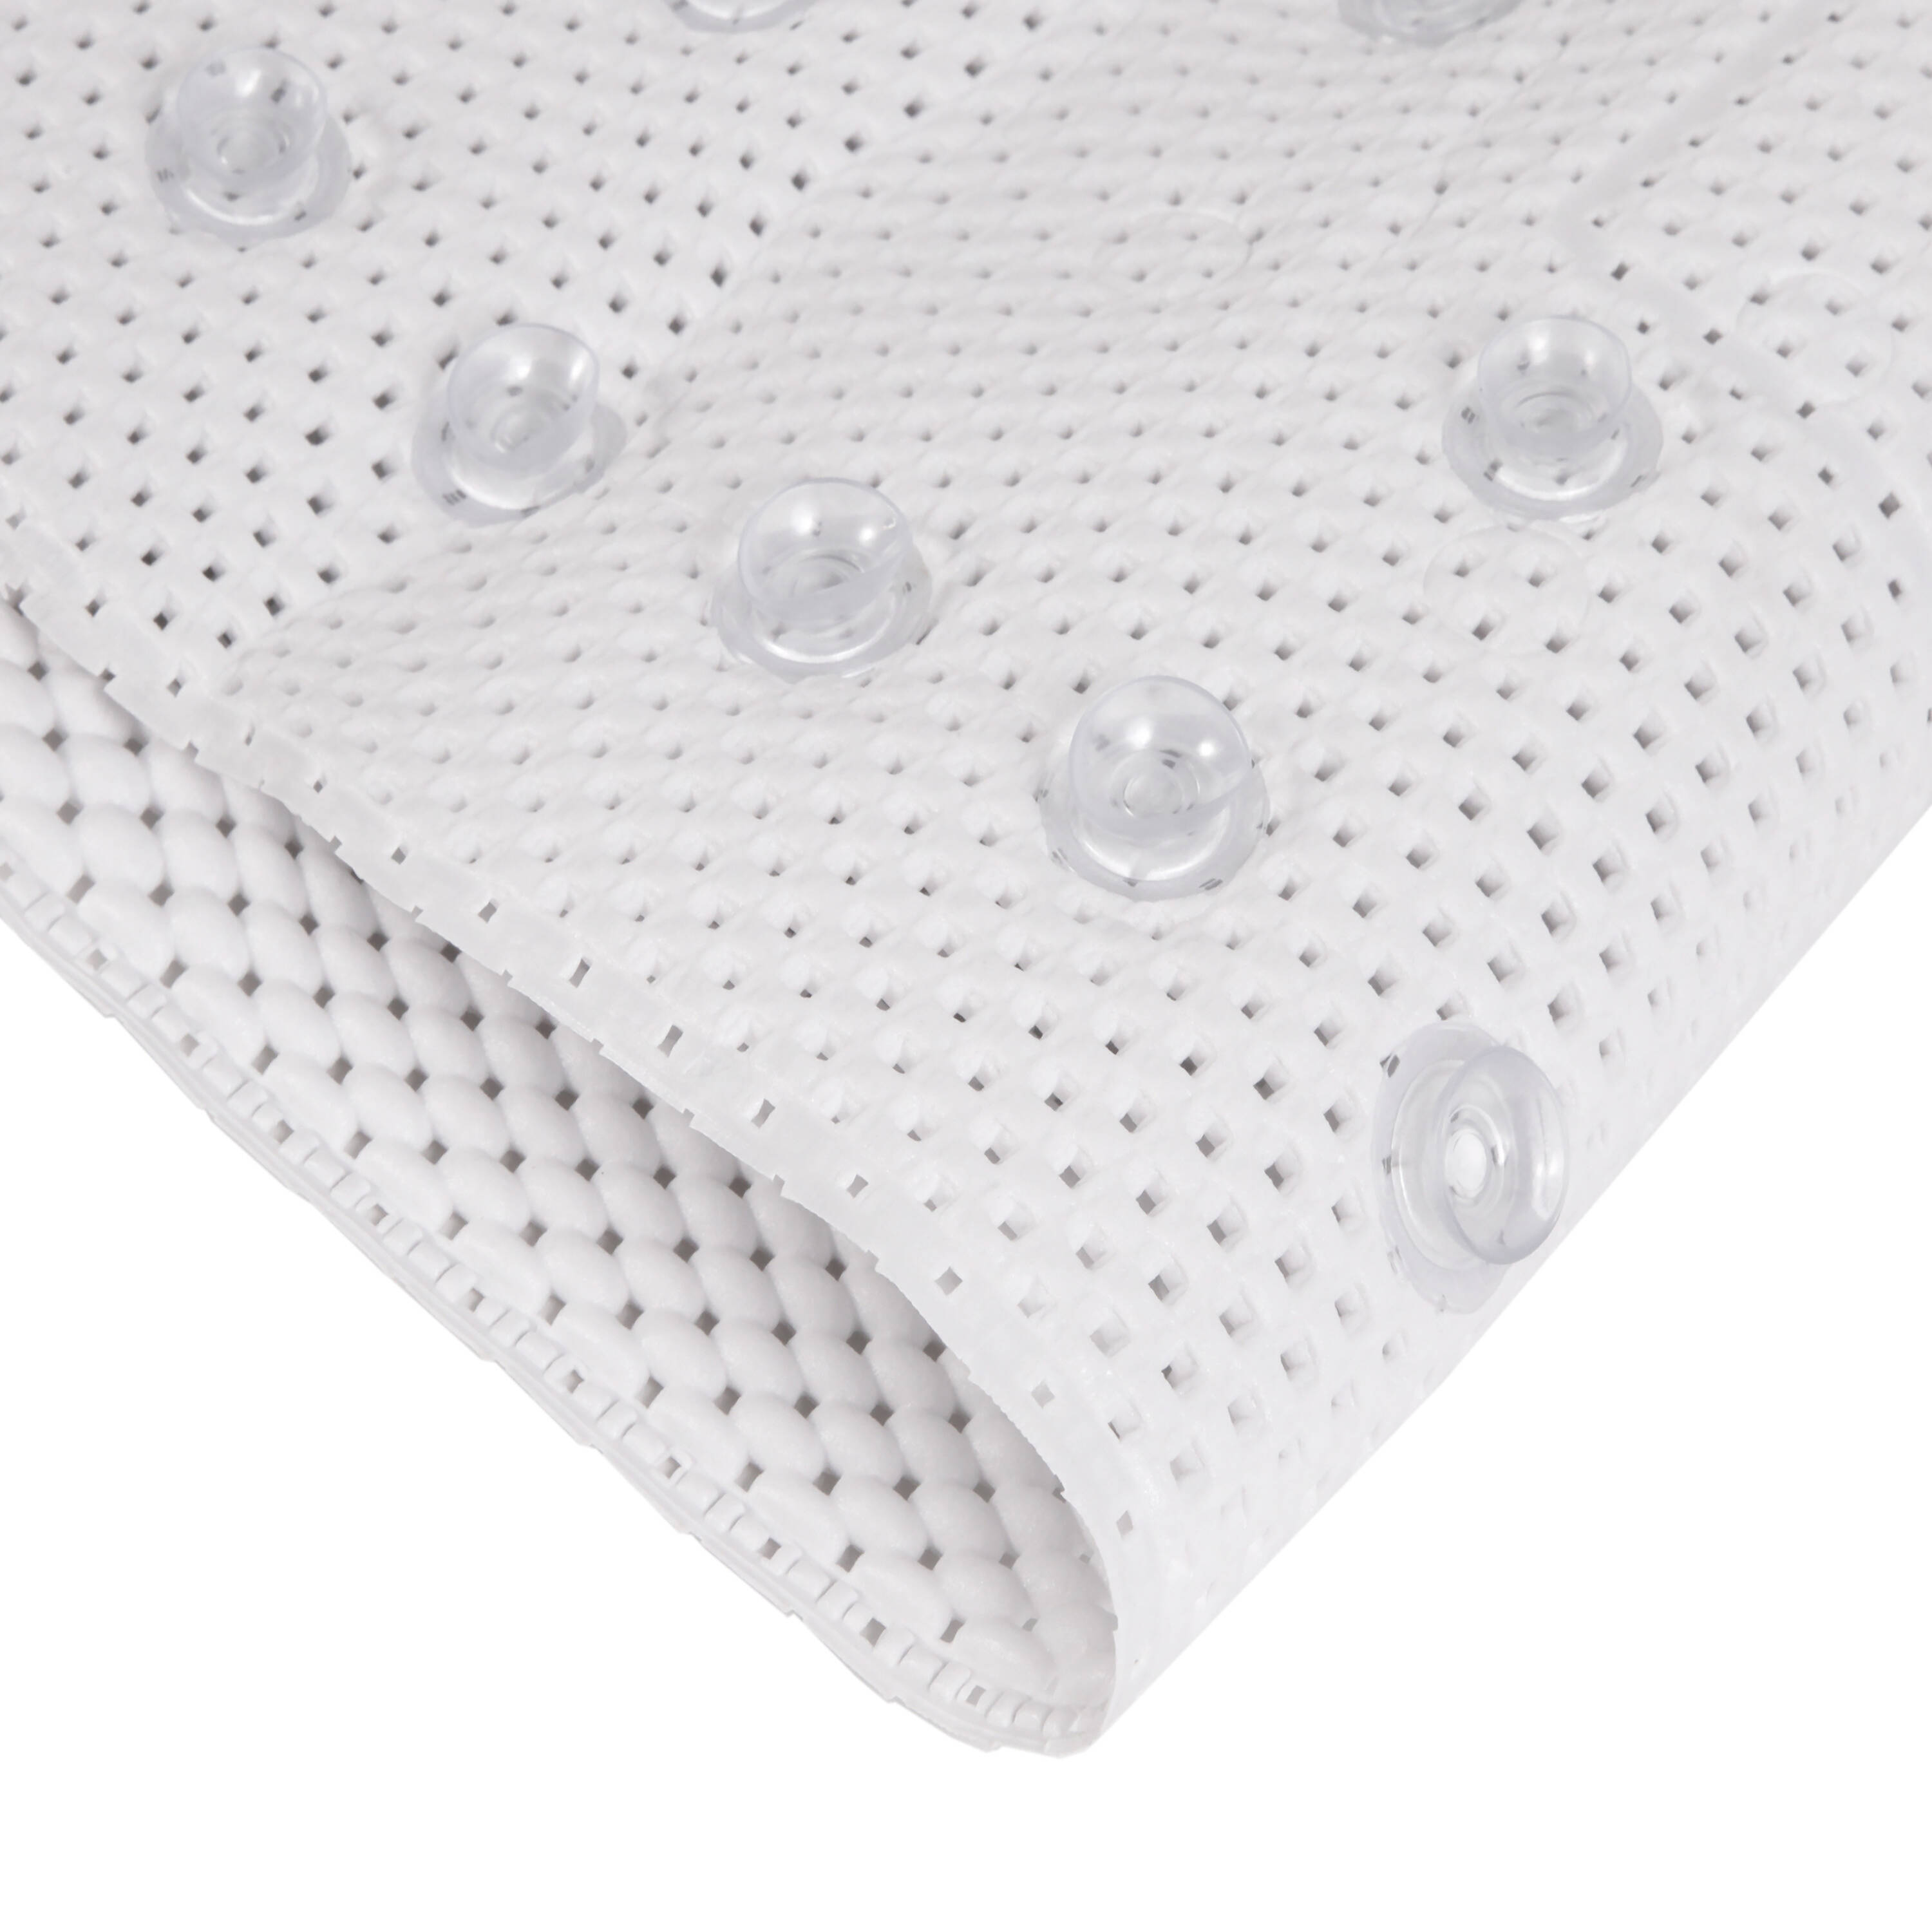 Cushioned Pillow Top Non-Slip Rubber Bathtub Mat Cream - Slipx Solutions